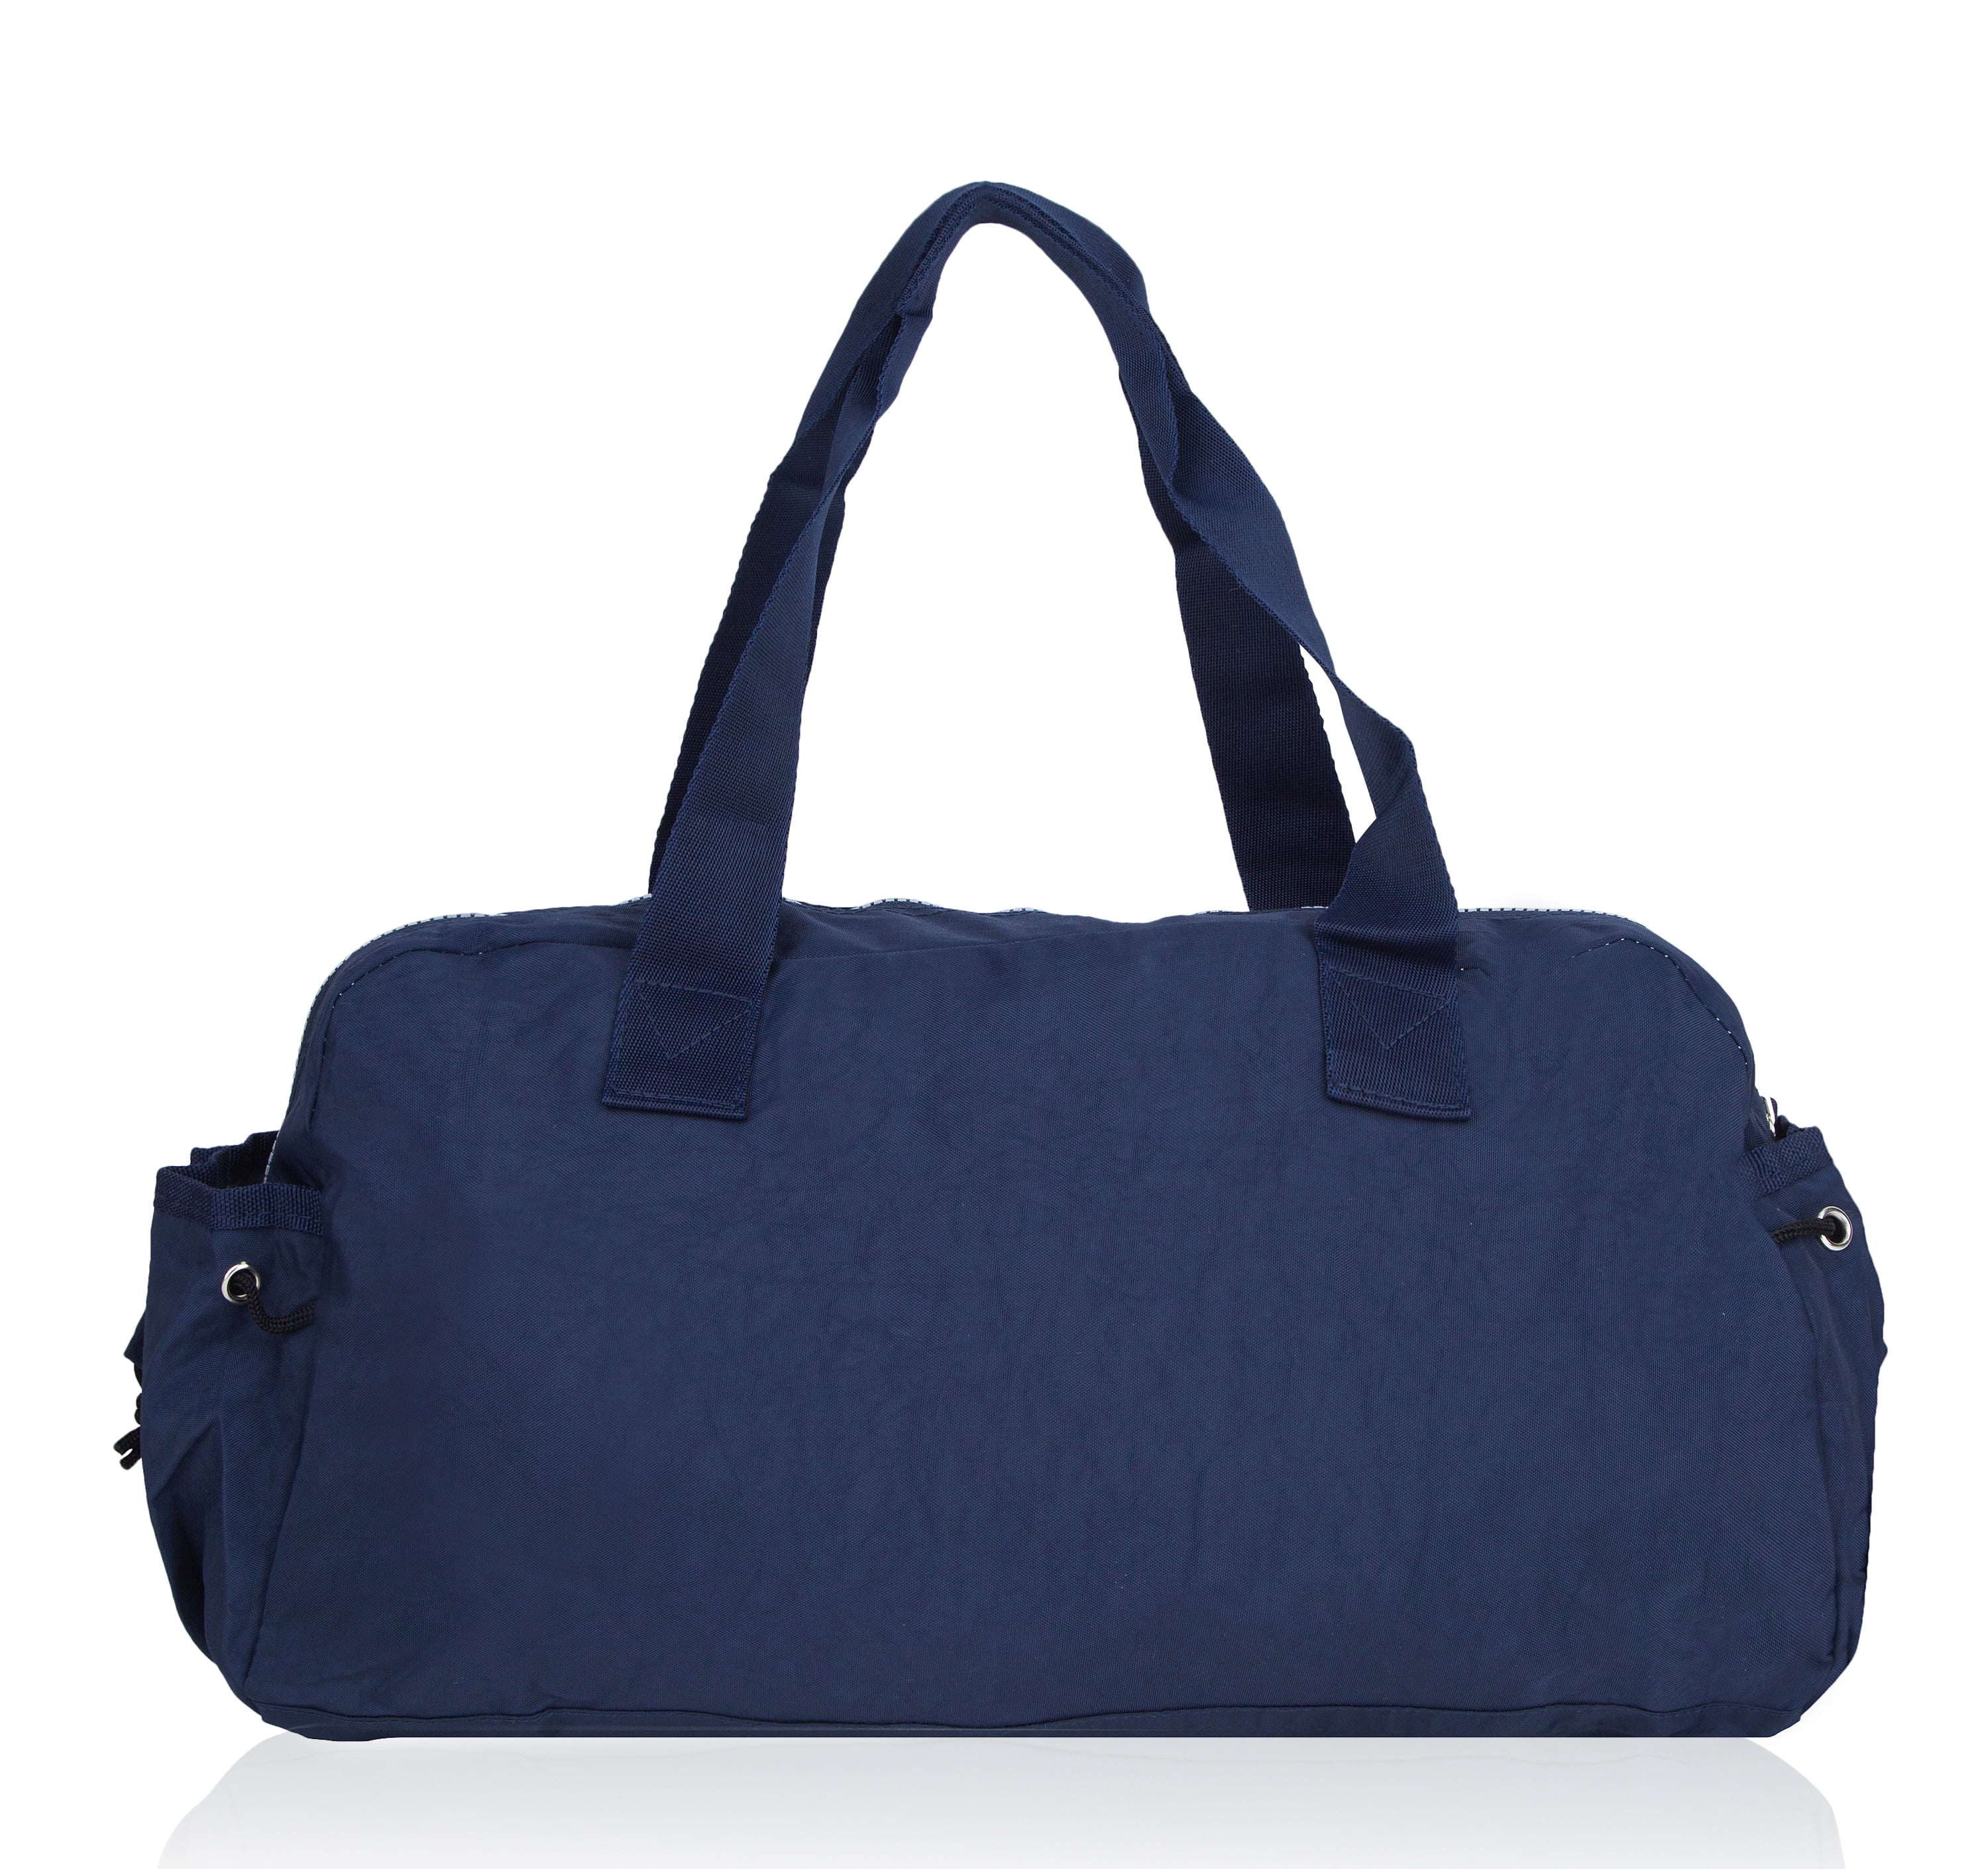 Waterproof Non-Slip Wearable Crossbody Bag fitness bag Shoulder Bag Dates Fruit Picture 